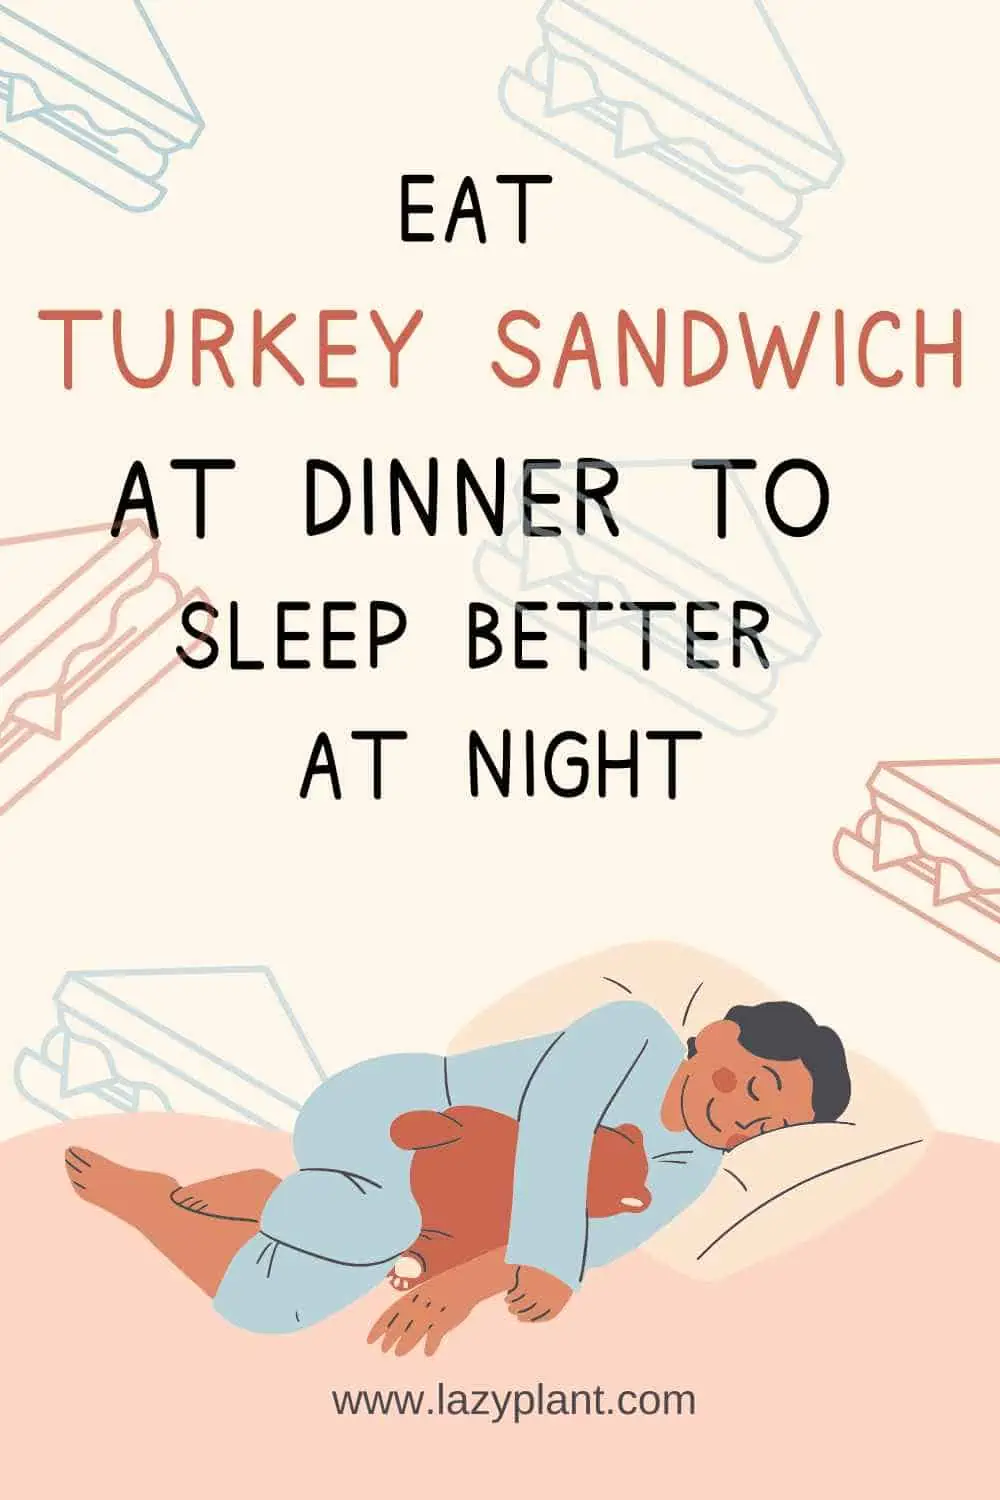 A turkey sandwich at dinner promotes a good night's sleep!